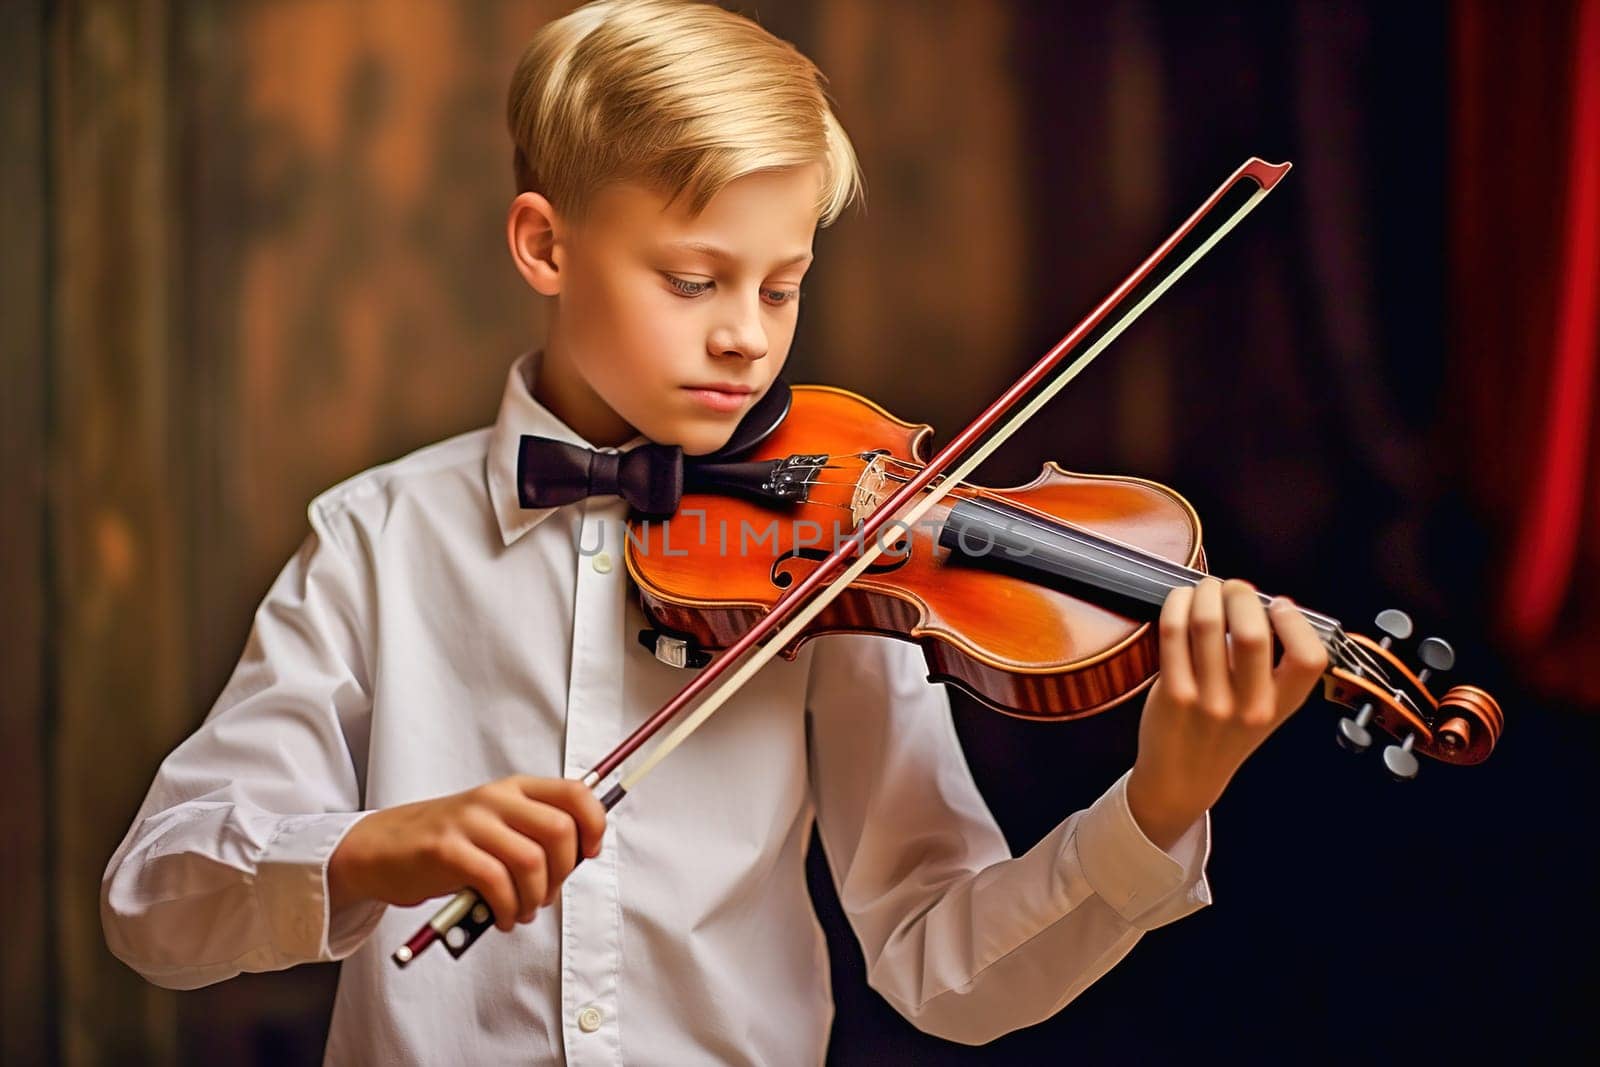 A focused boy plays the violin. by Yurich32